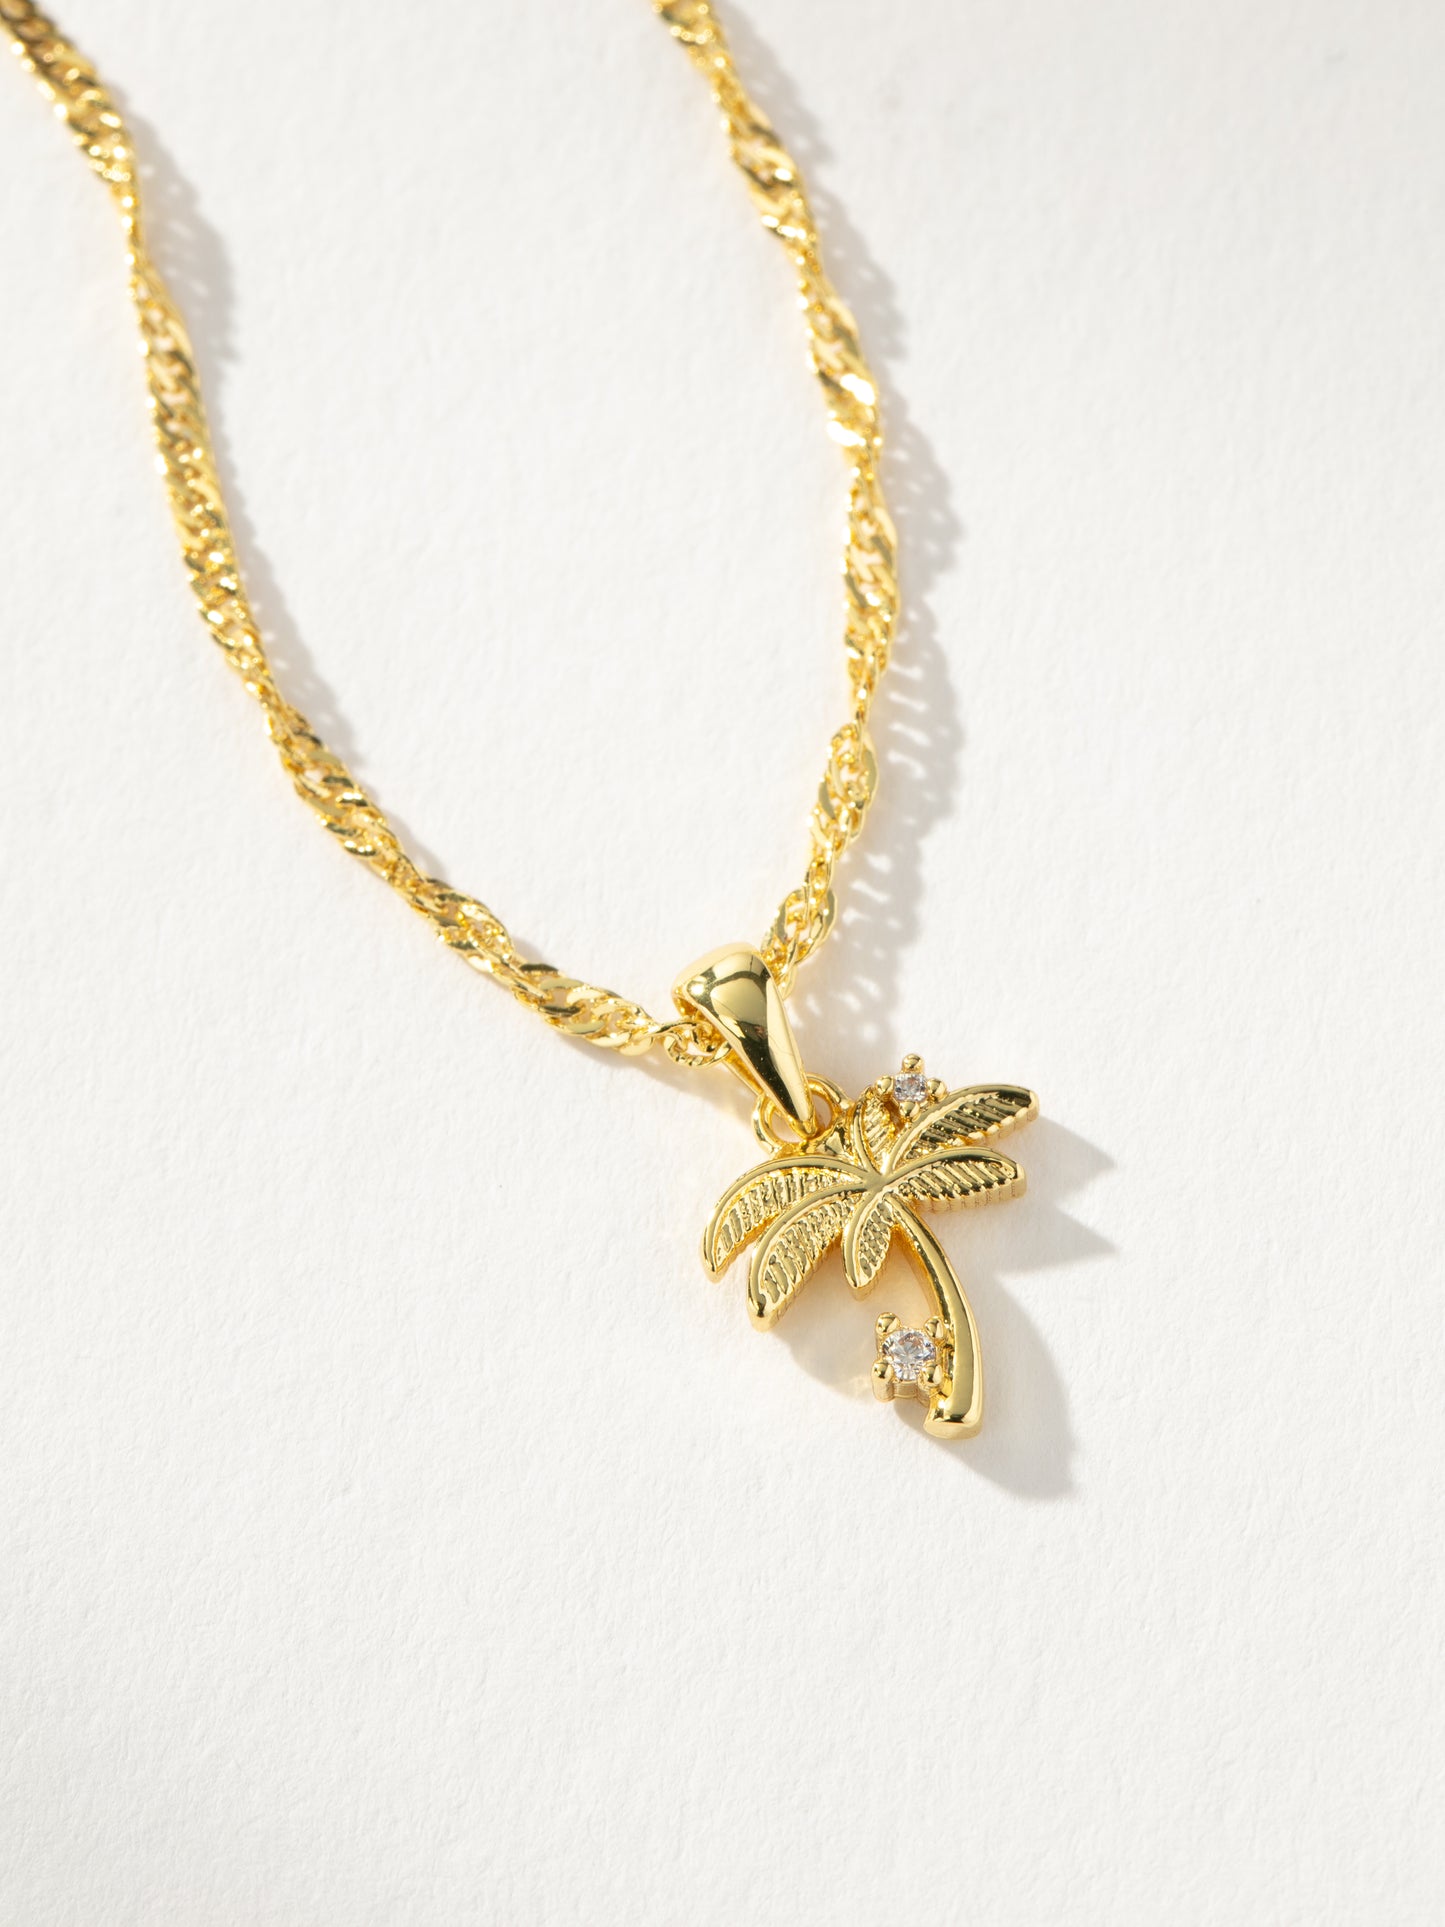 Palm Tree Pendant Necklace | Gold | Product Detail Image | Uncommon James